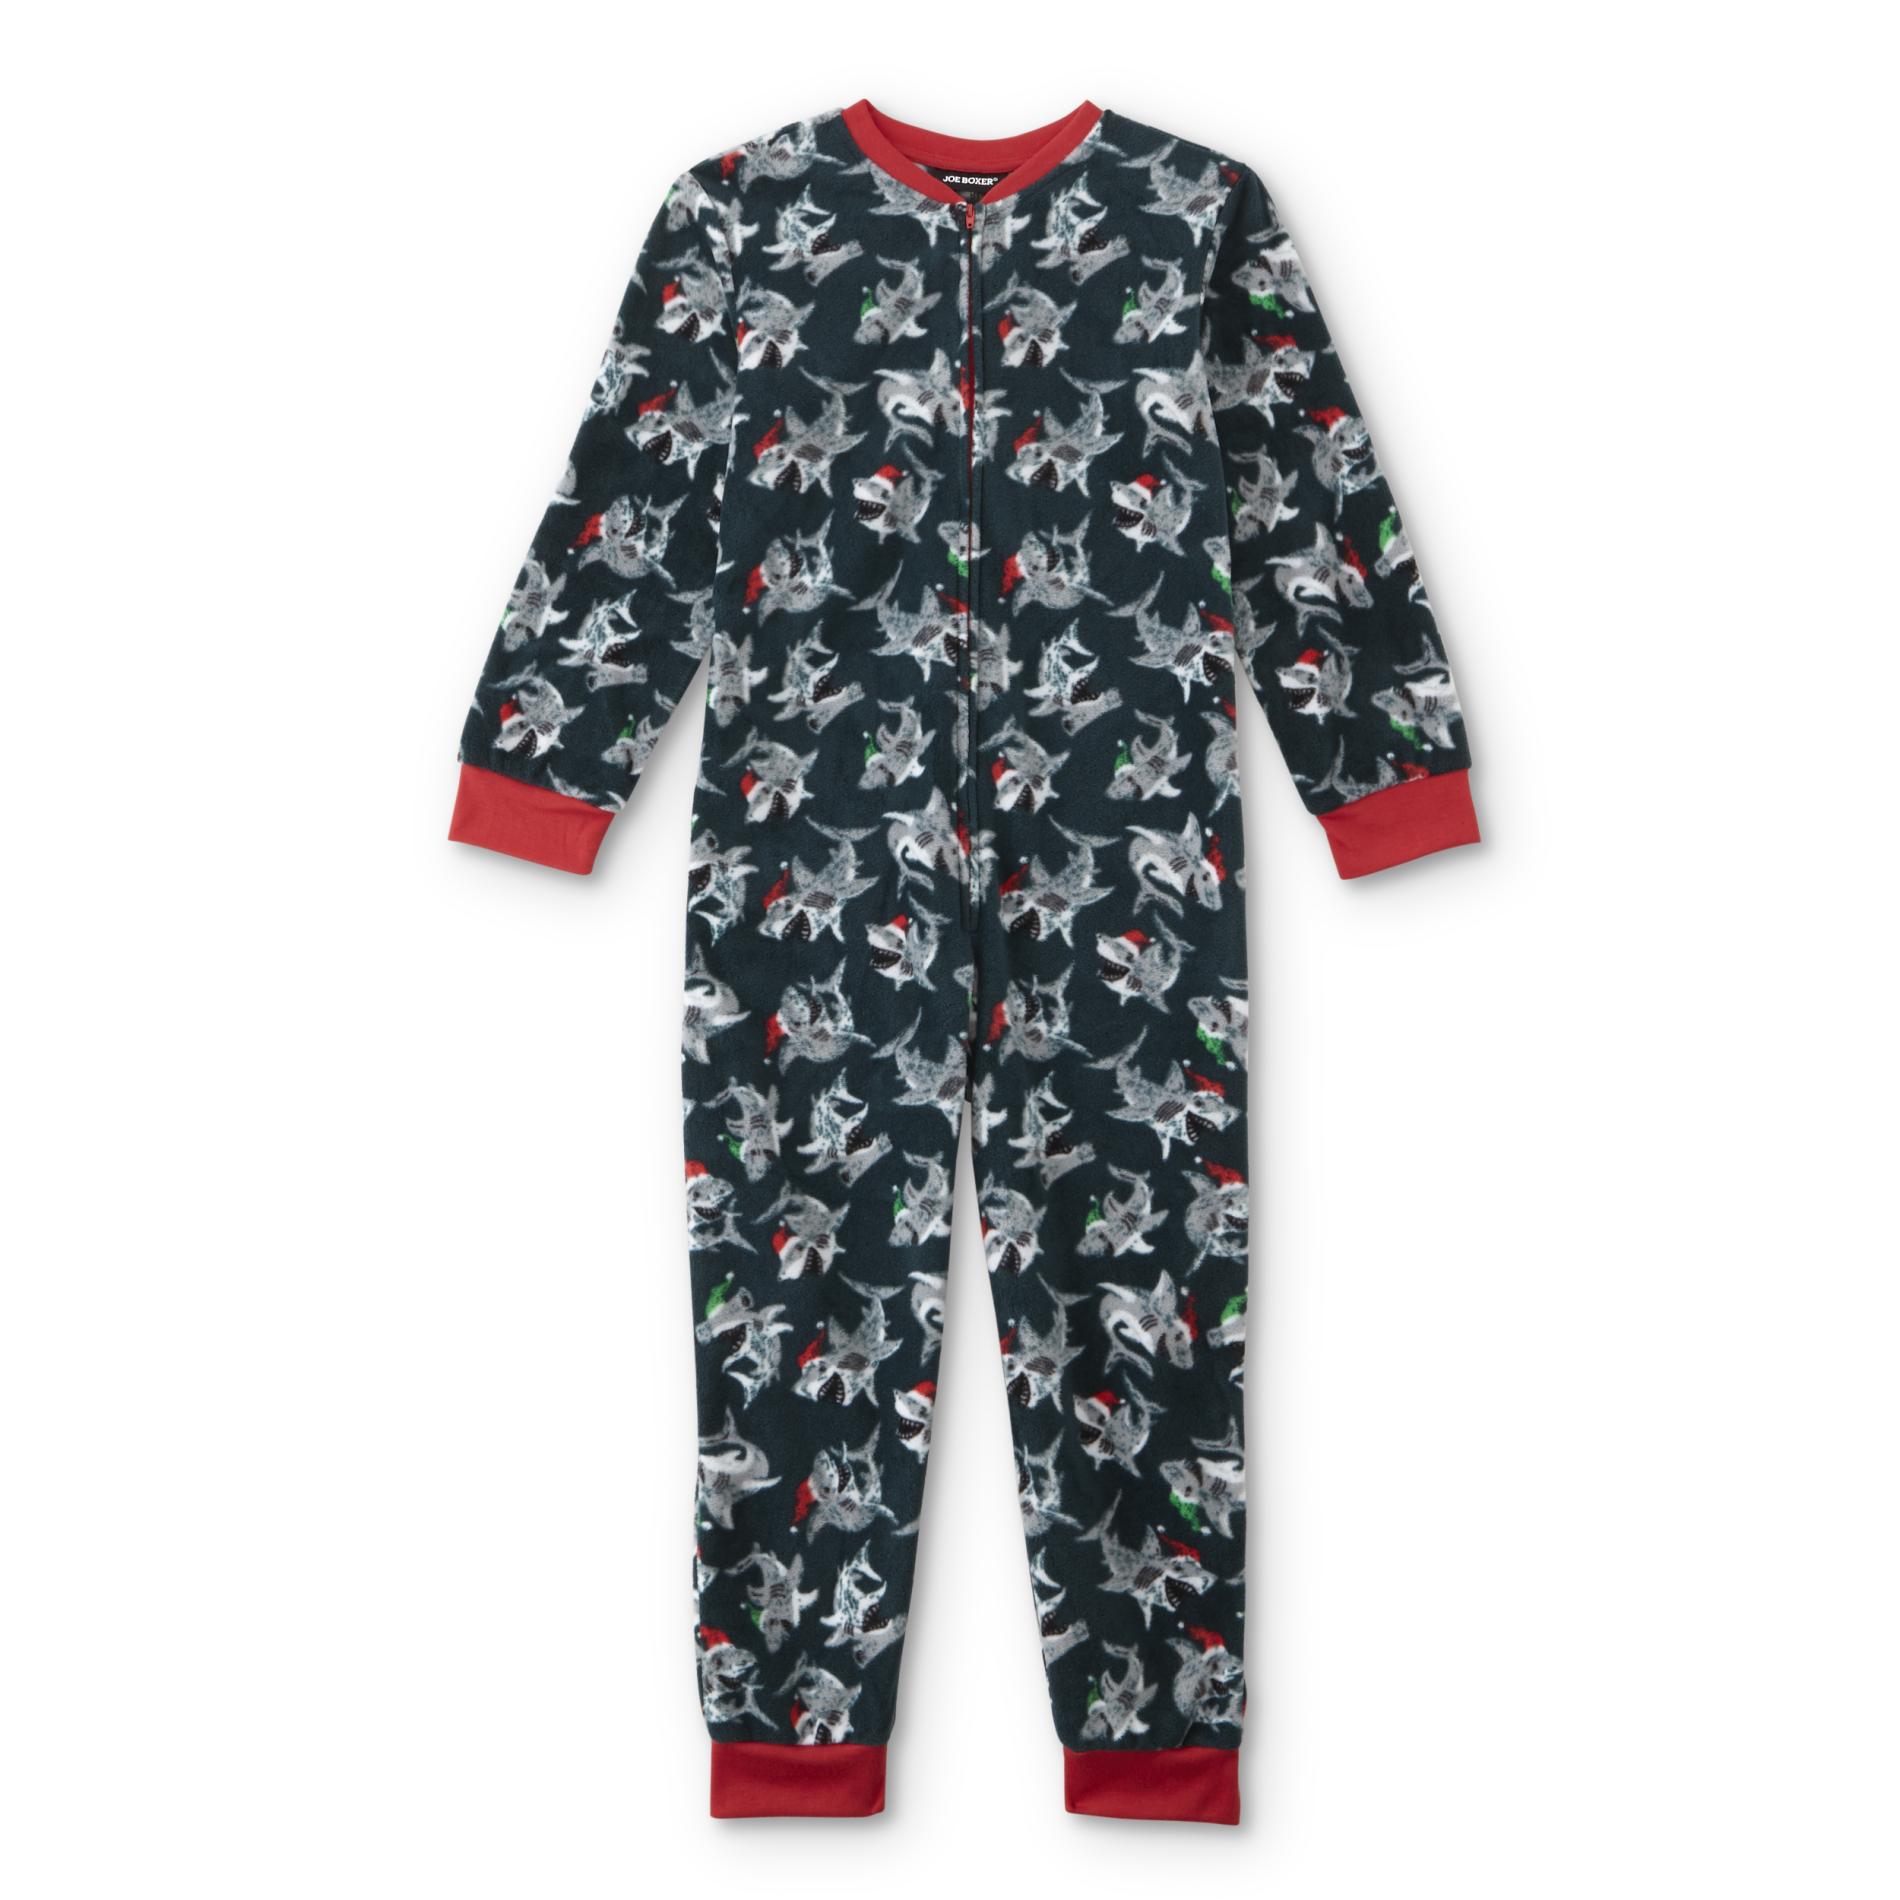 Joe Boxer Boys' Blanket Sleeper Pajamas - Santa Sharks